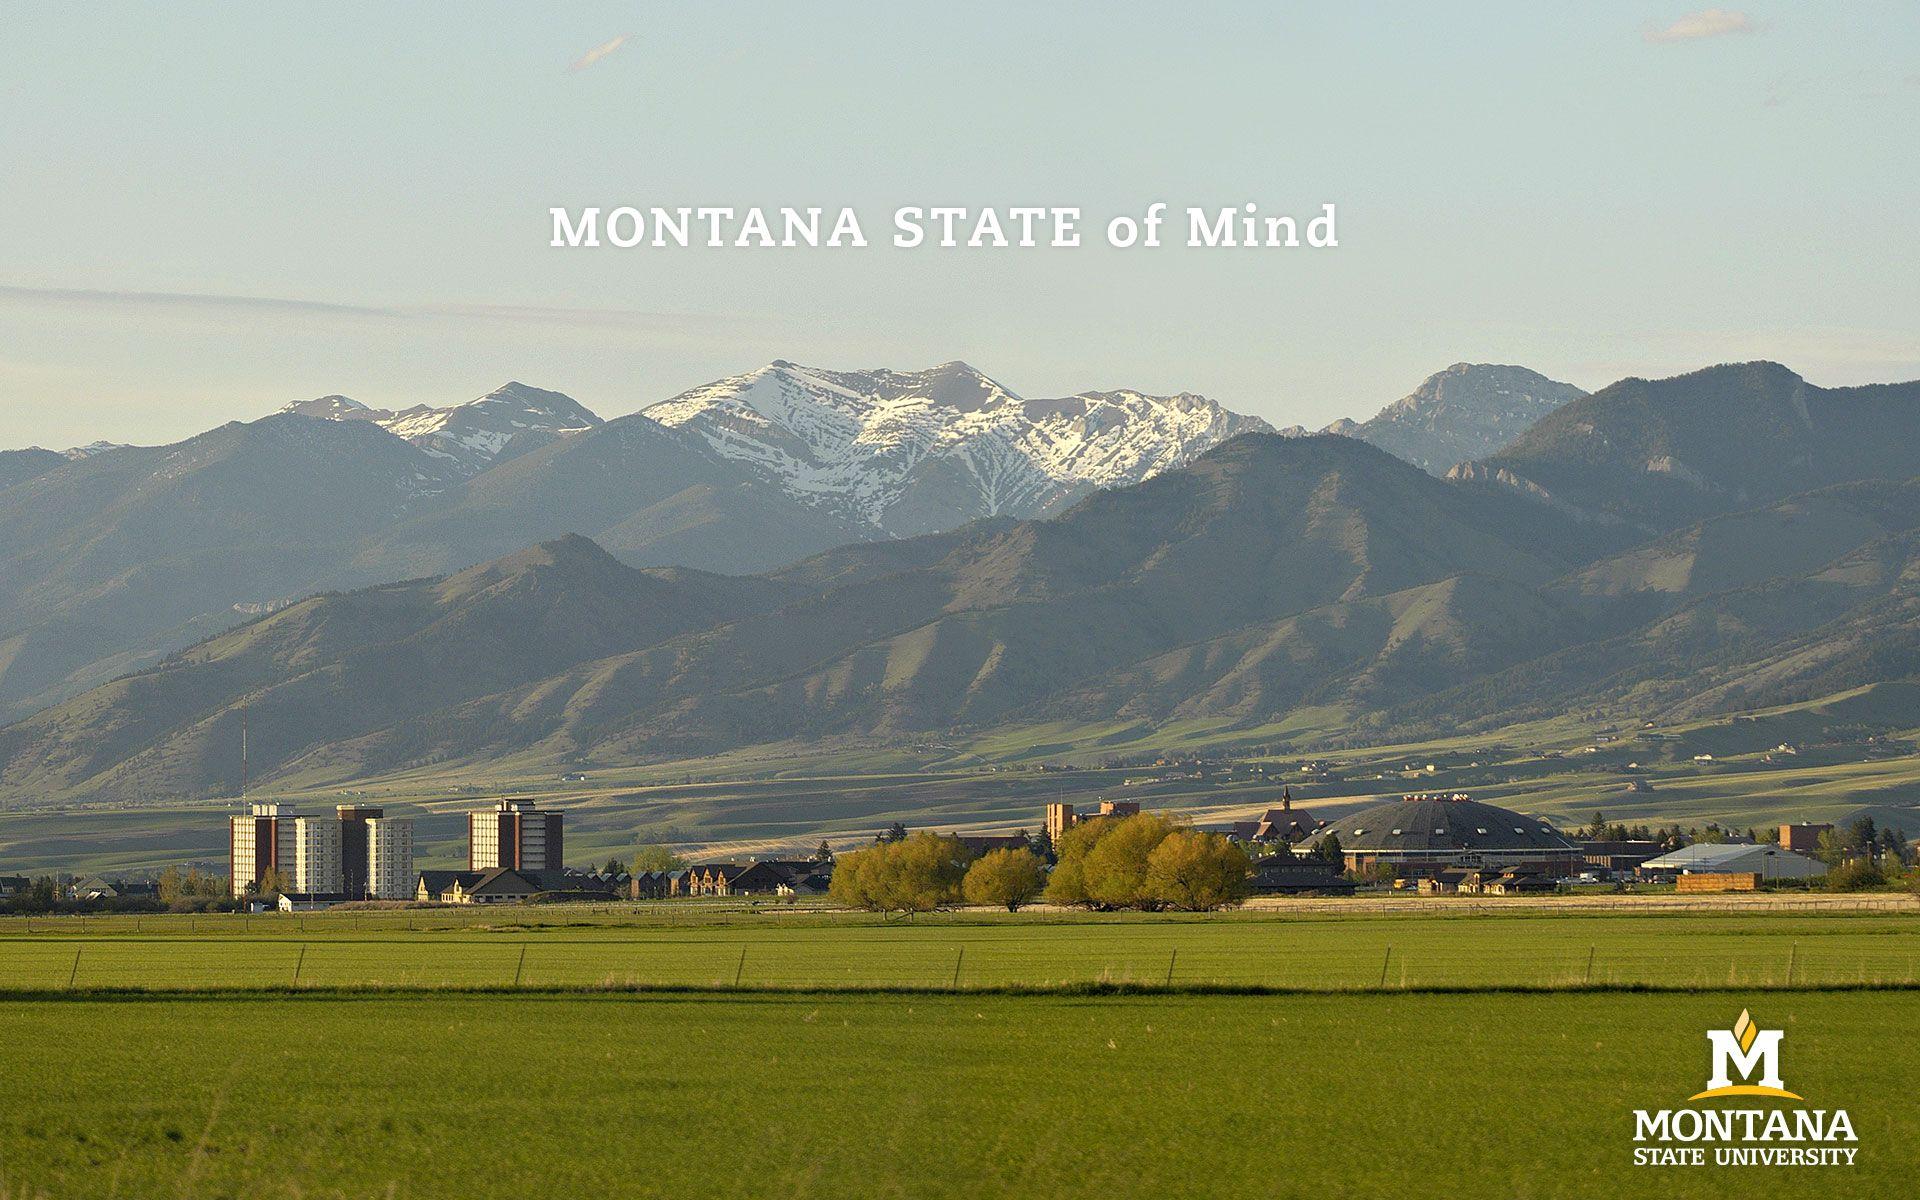 Desktop, Mobile and Tablet Wallpaper. Montana State